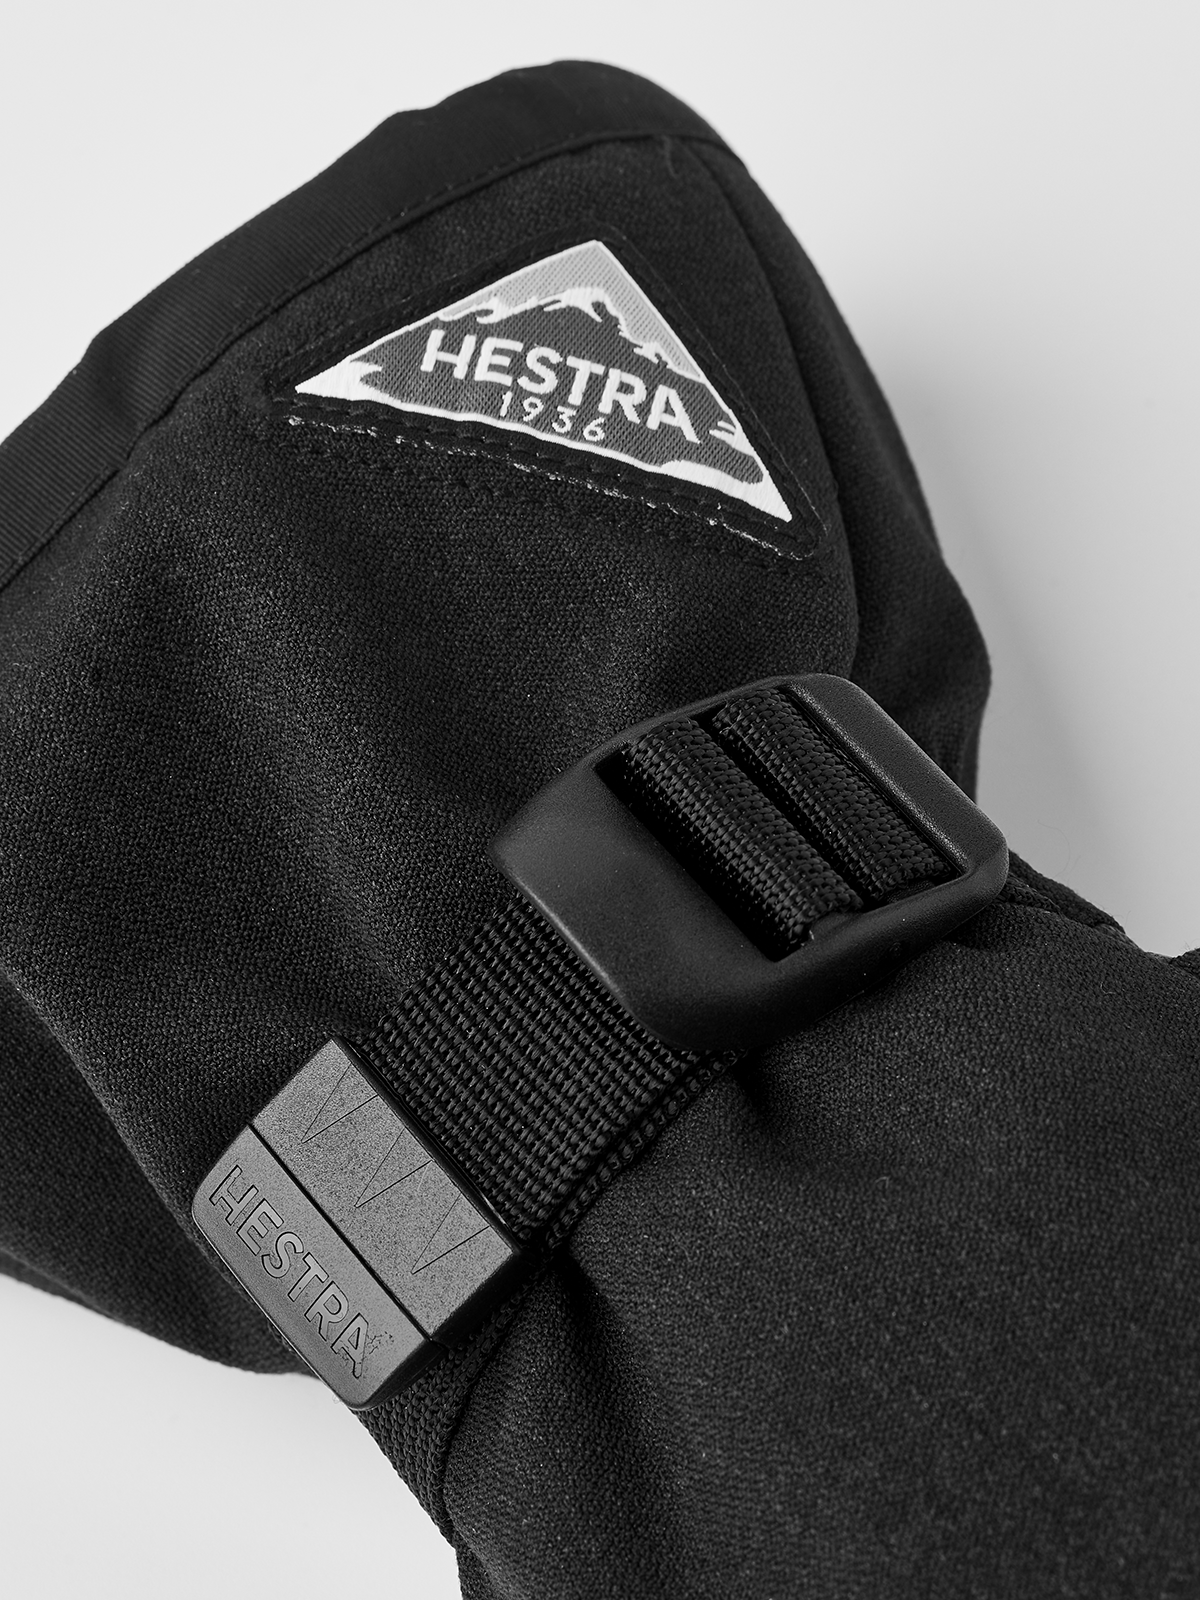 Powder Gauntlet - Black | Hestra Gloves